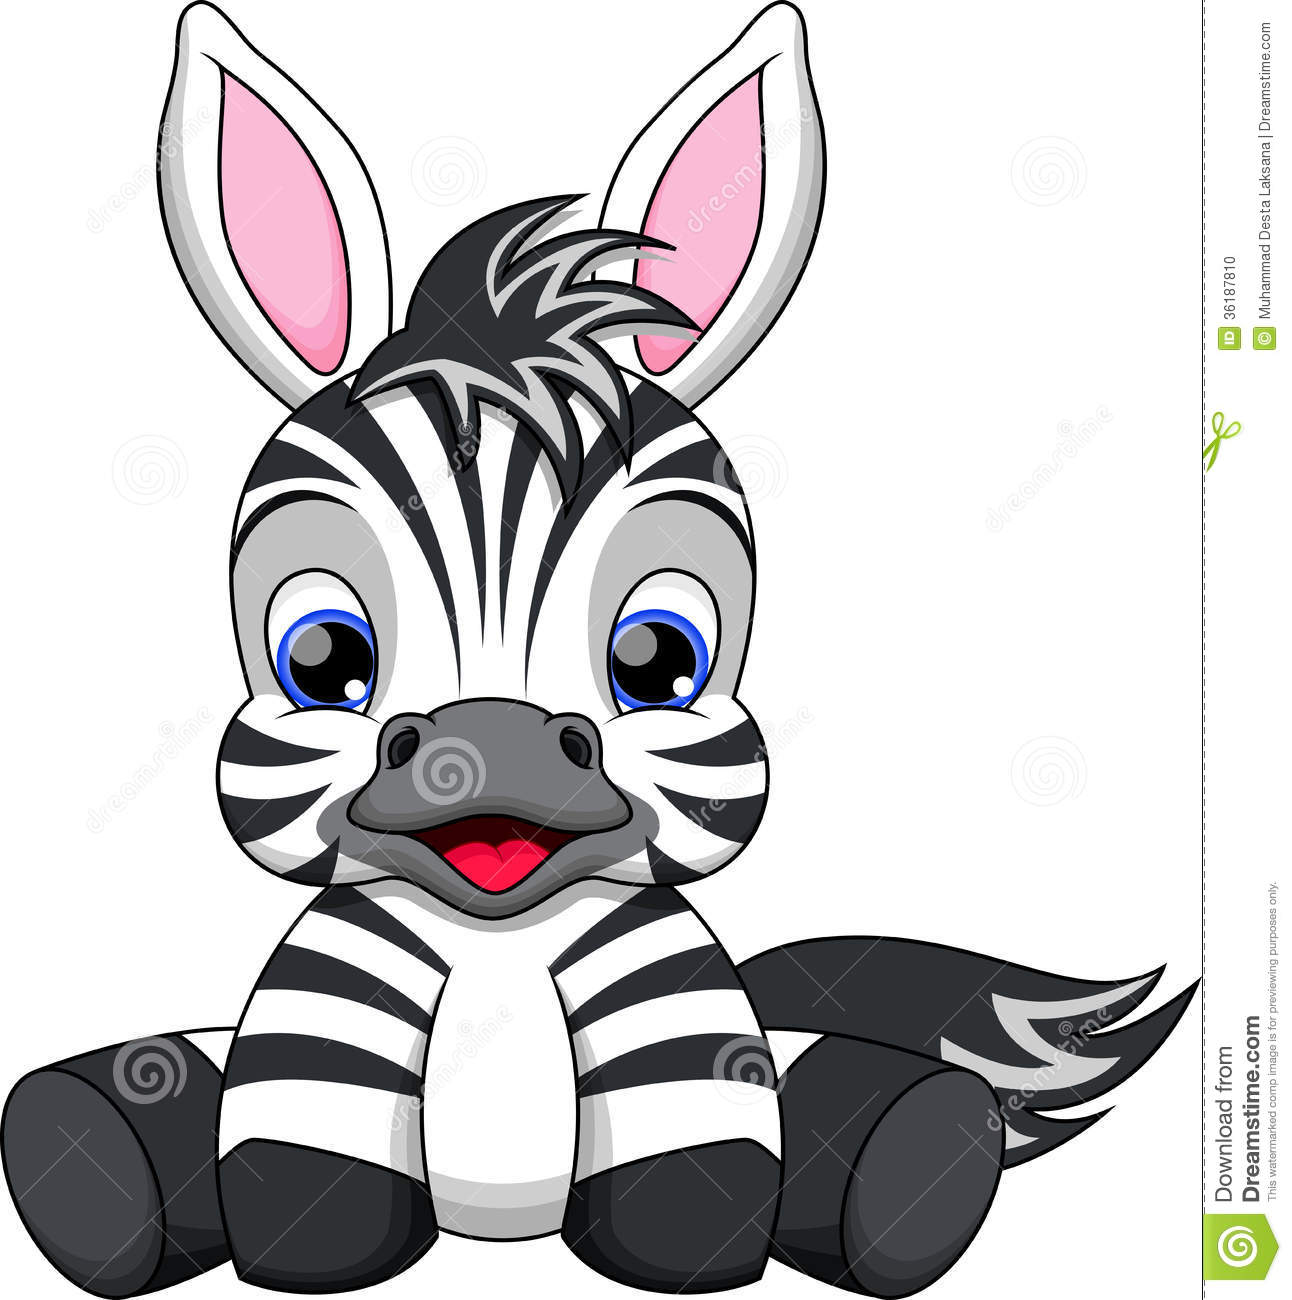 Baby zebra cartoon